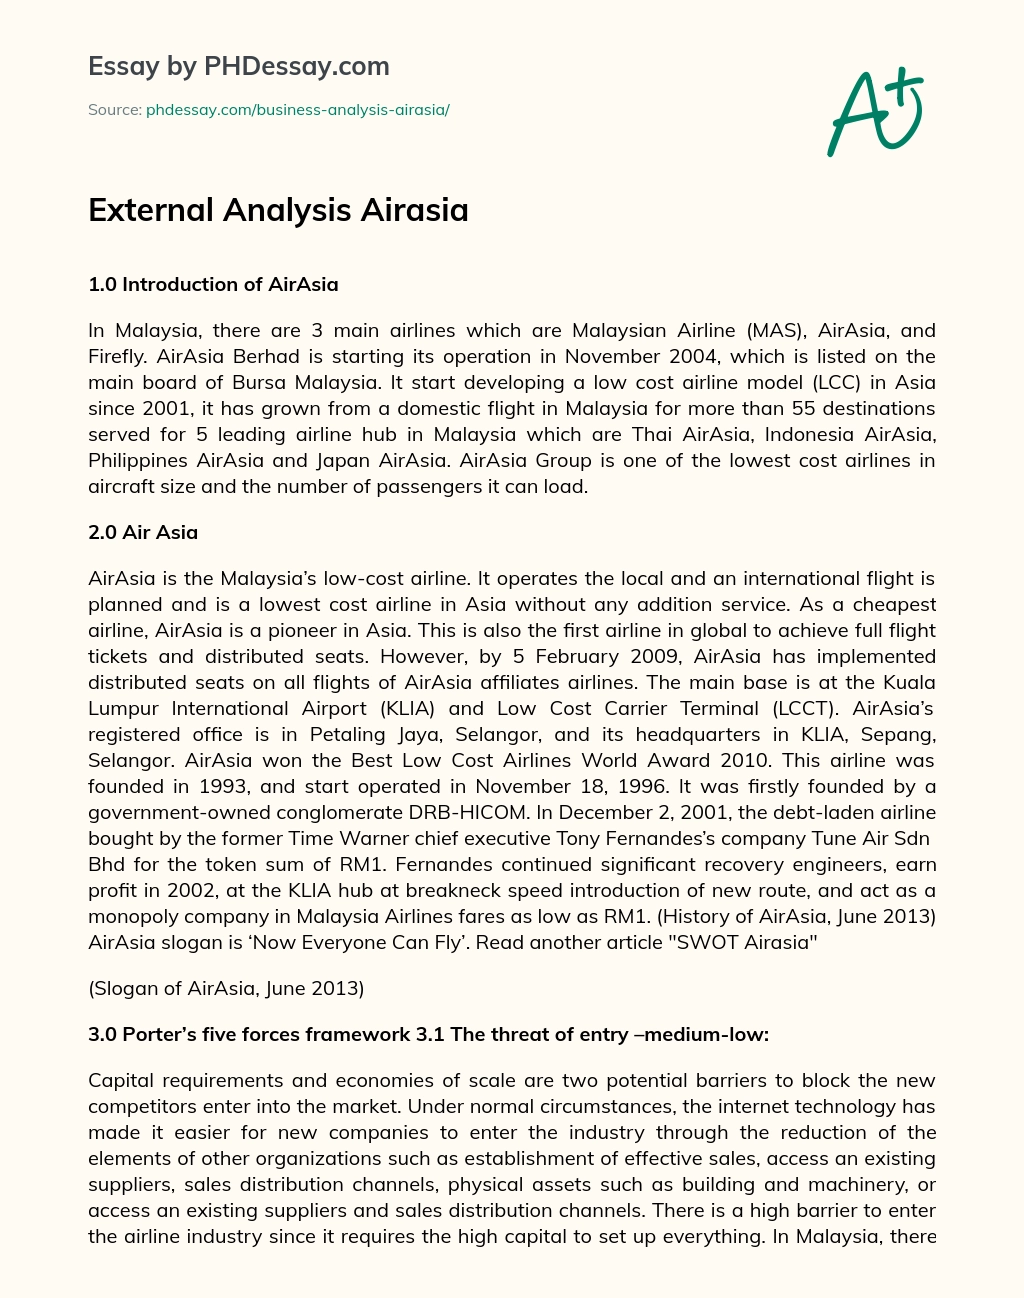 External Analysis Airasia essay